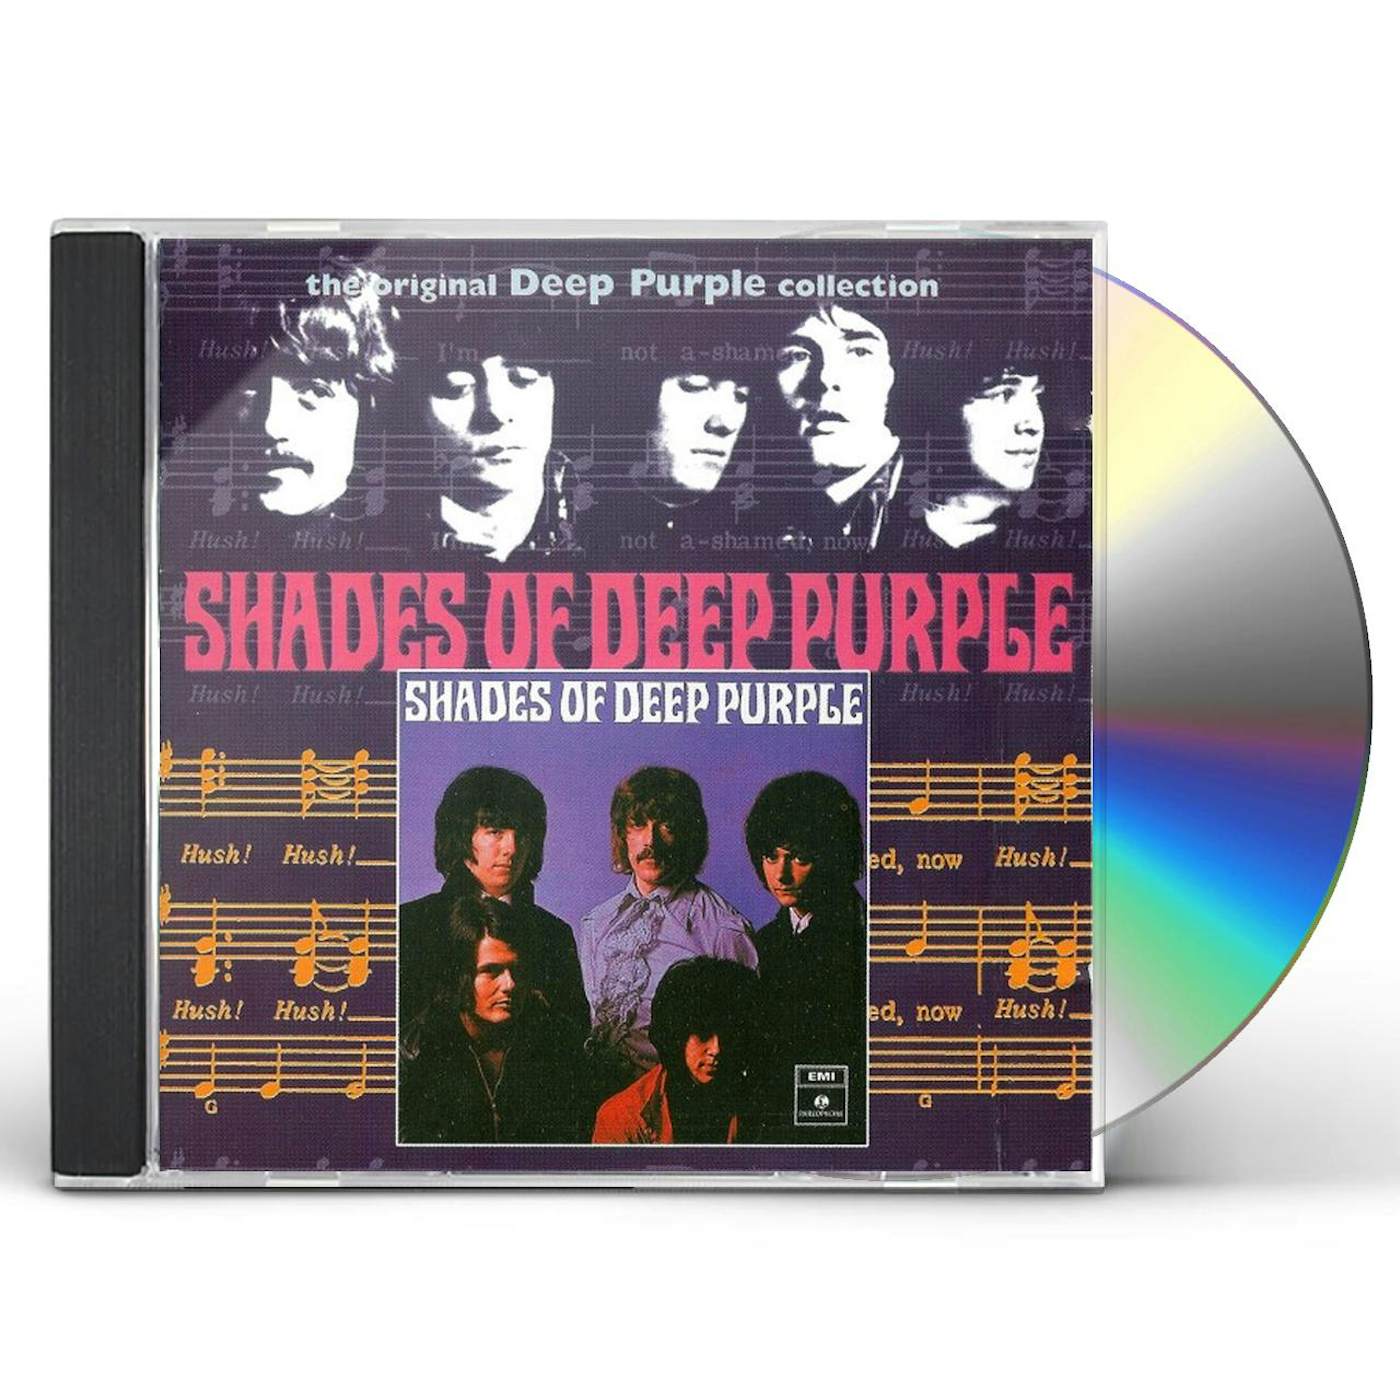 SHADES OF DEEP PURPLE CD